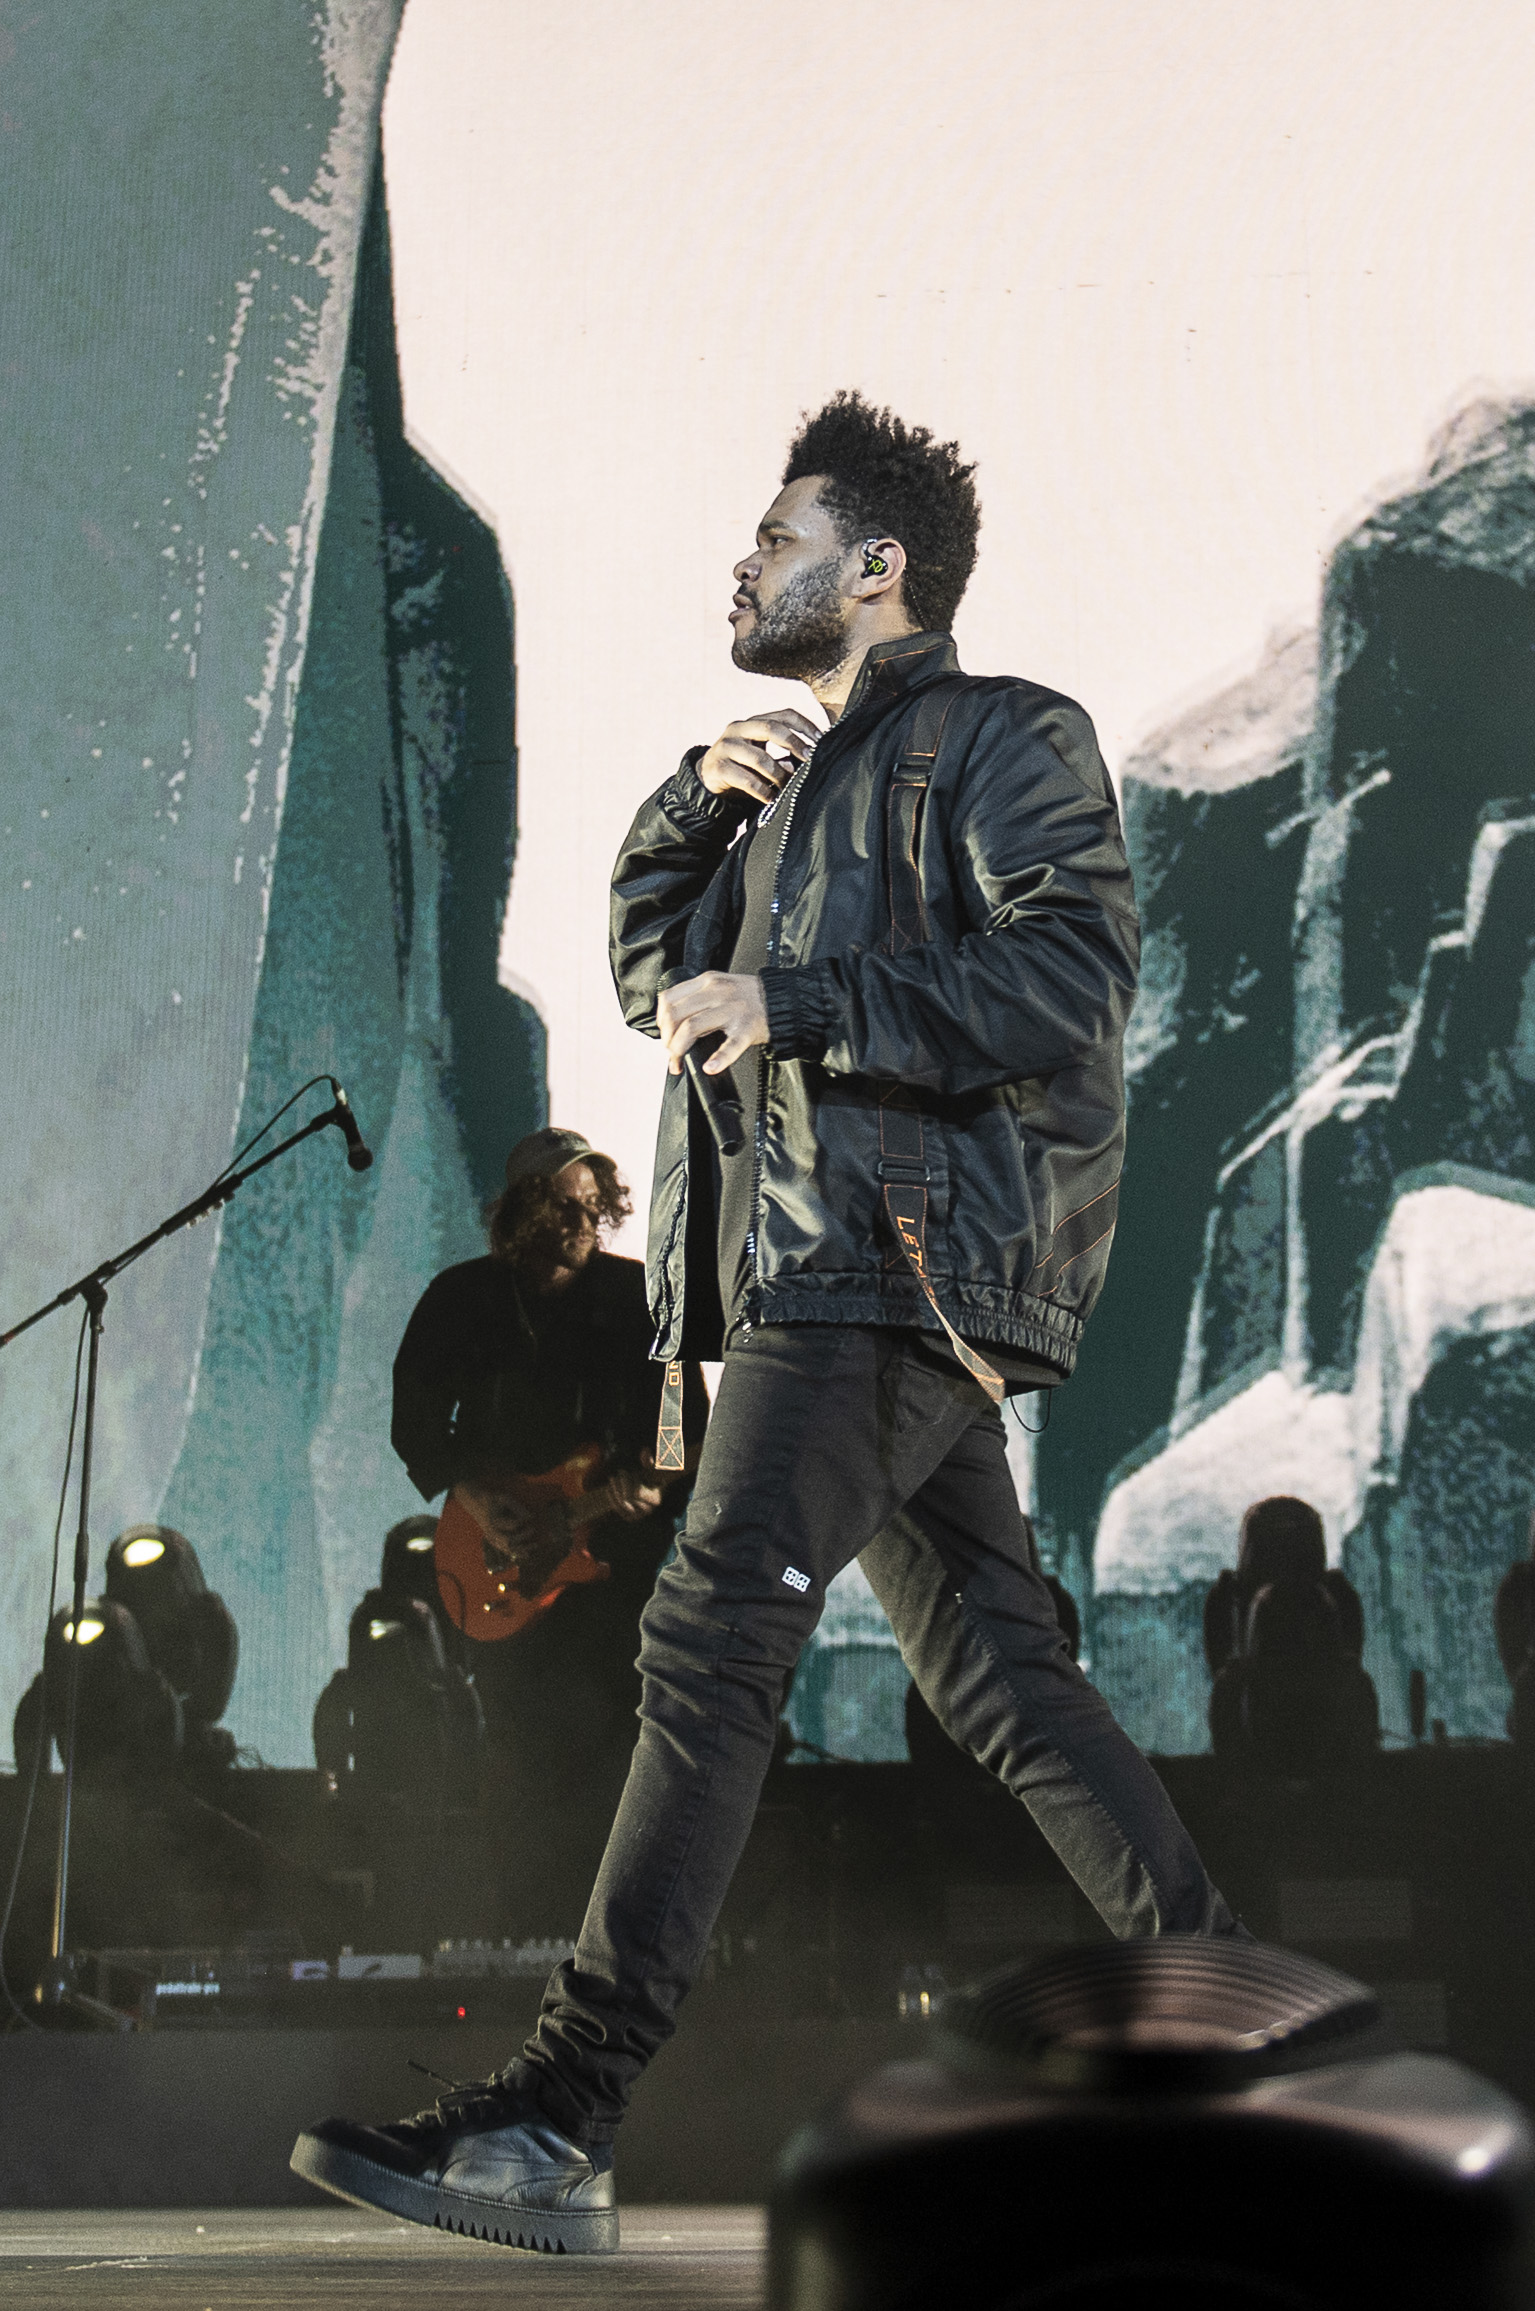 The Weeknd: Abel Tesfaye mostró sus diferentes caras ante 20 mil personas